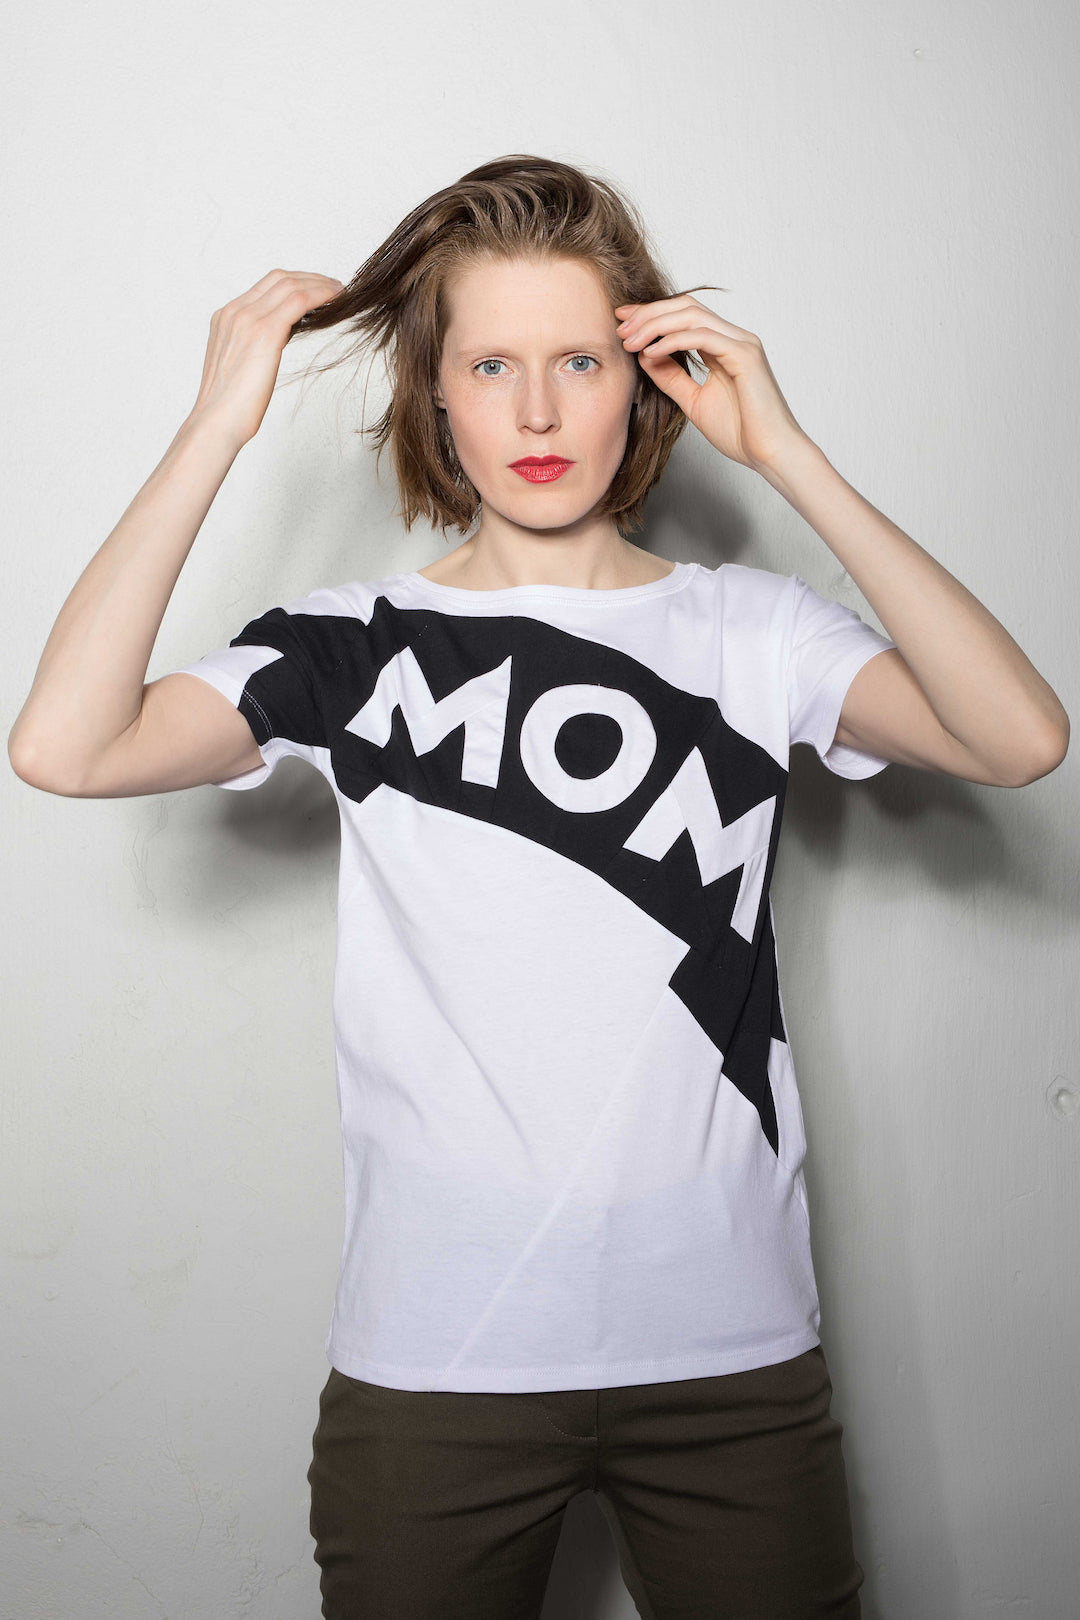 Up-shirt for women, MOM motif | White, black - Reet Aus